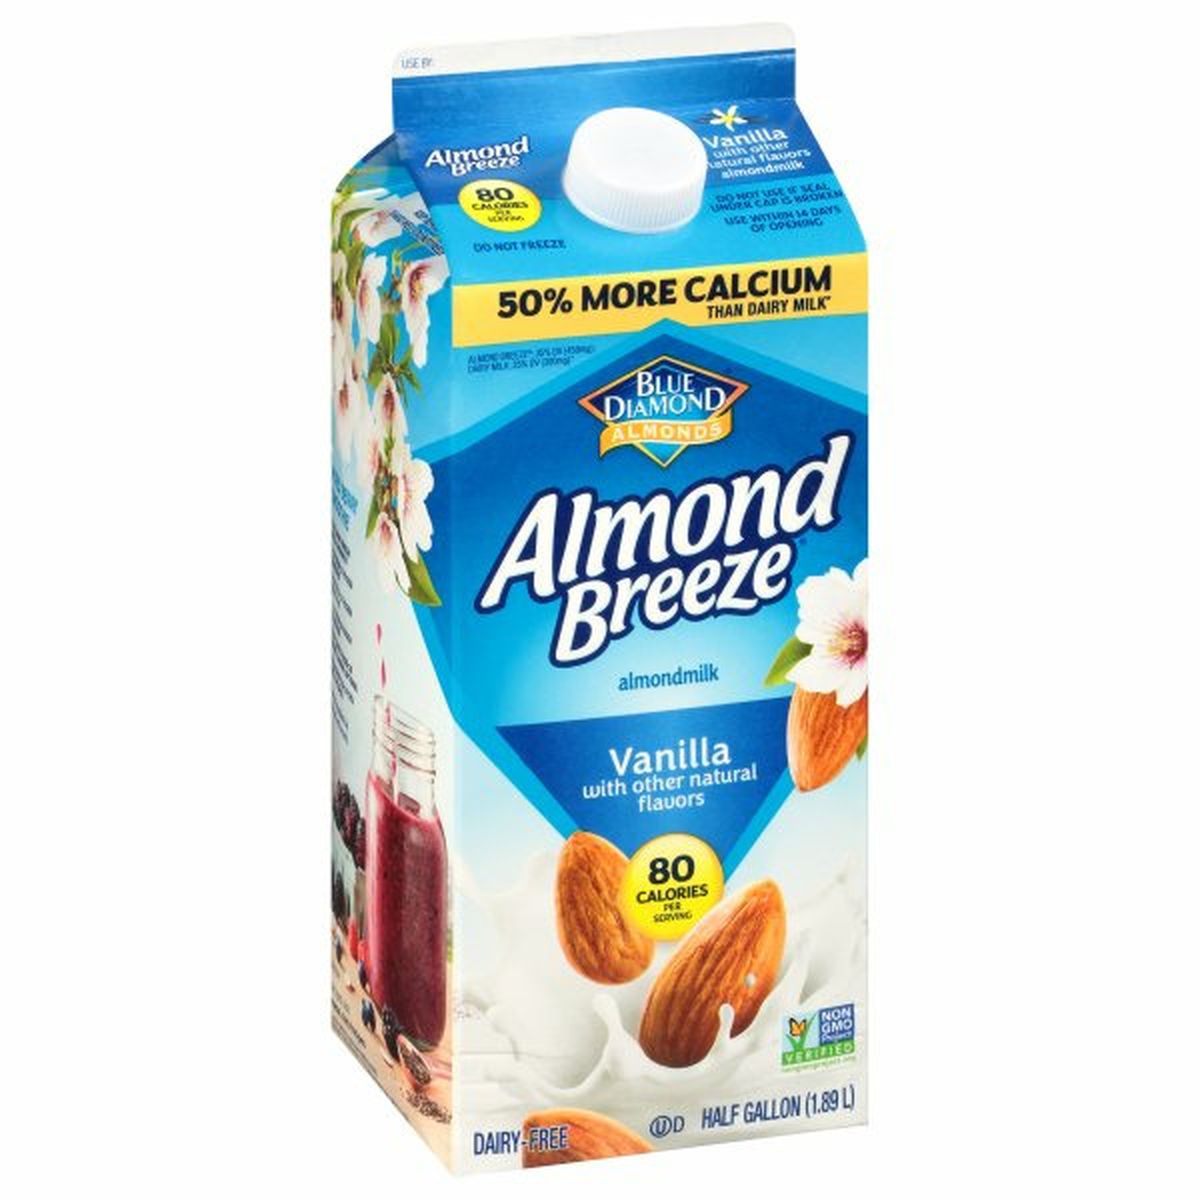 Calories in Almond Breeze Almond Breeze Almondmilk, Dairy-Free, Vanilla